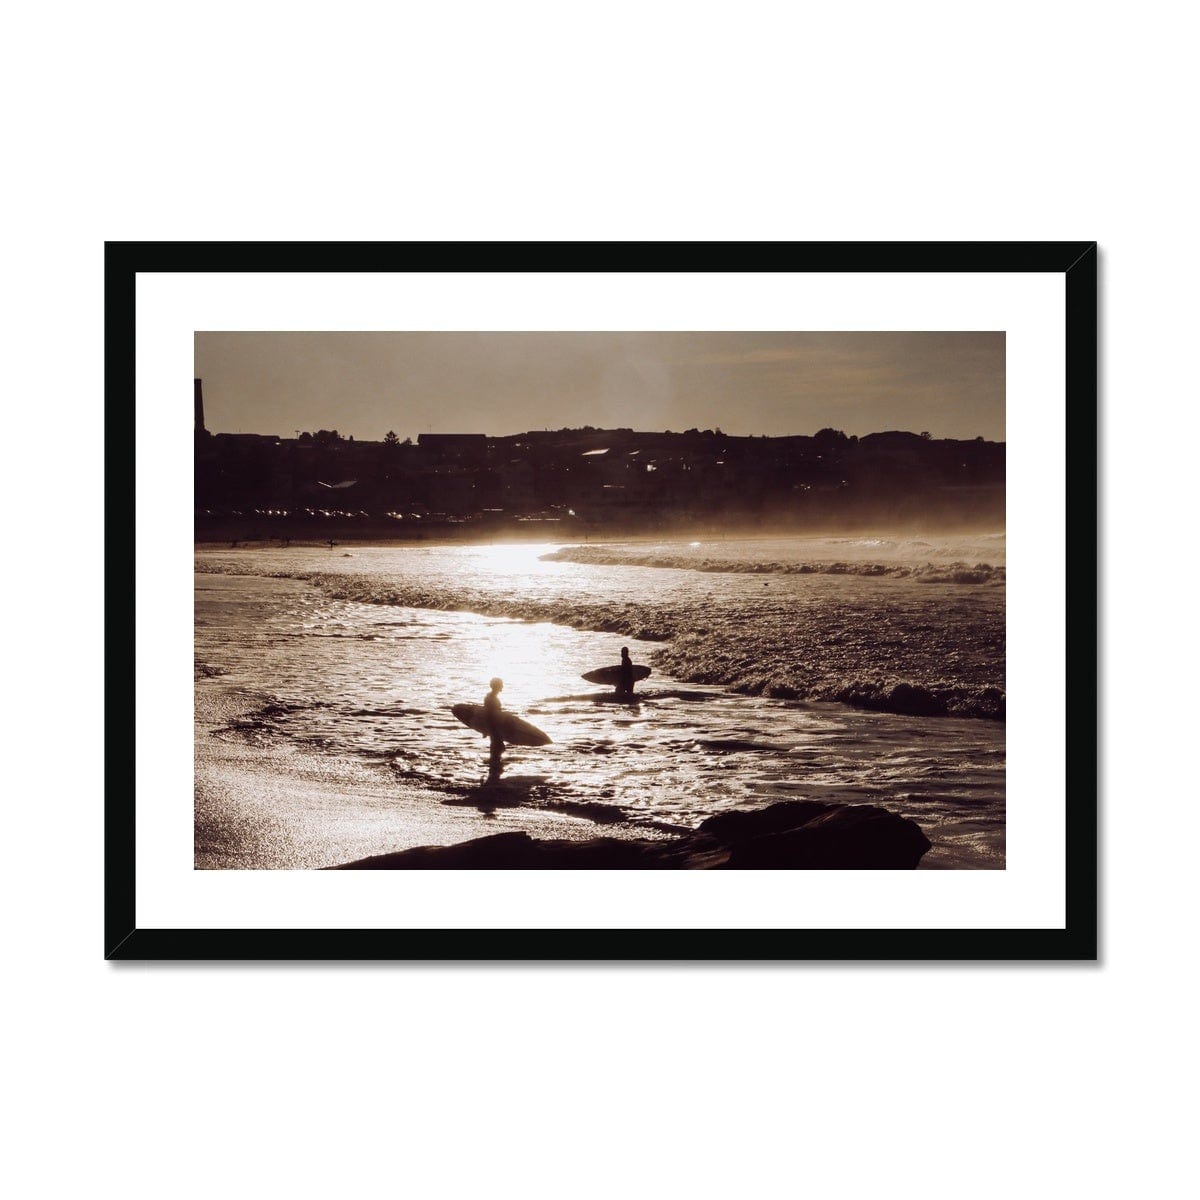 Adam Davies Framed A4 Landscape / Black Frame Ready To Surf Framed Print